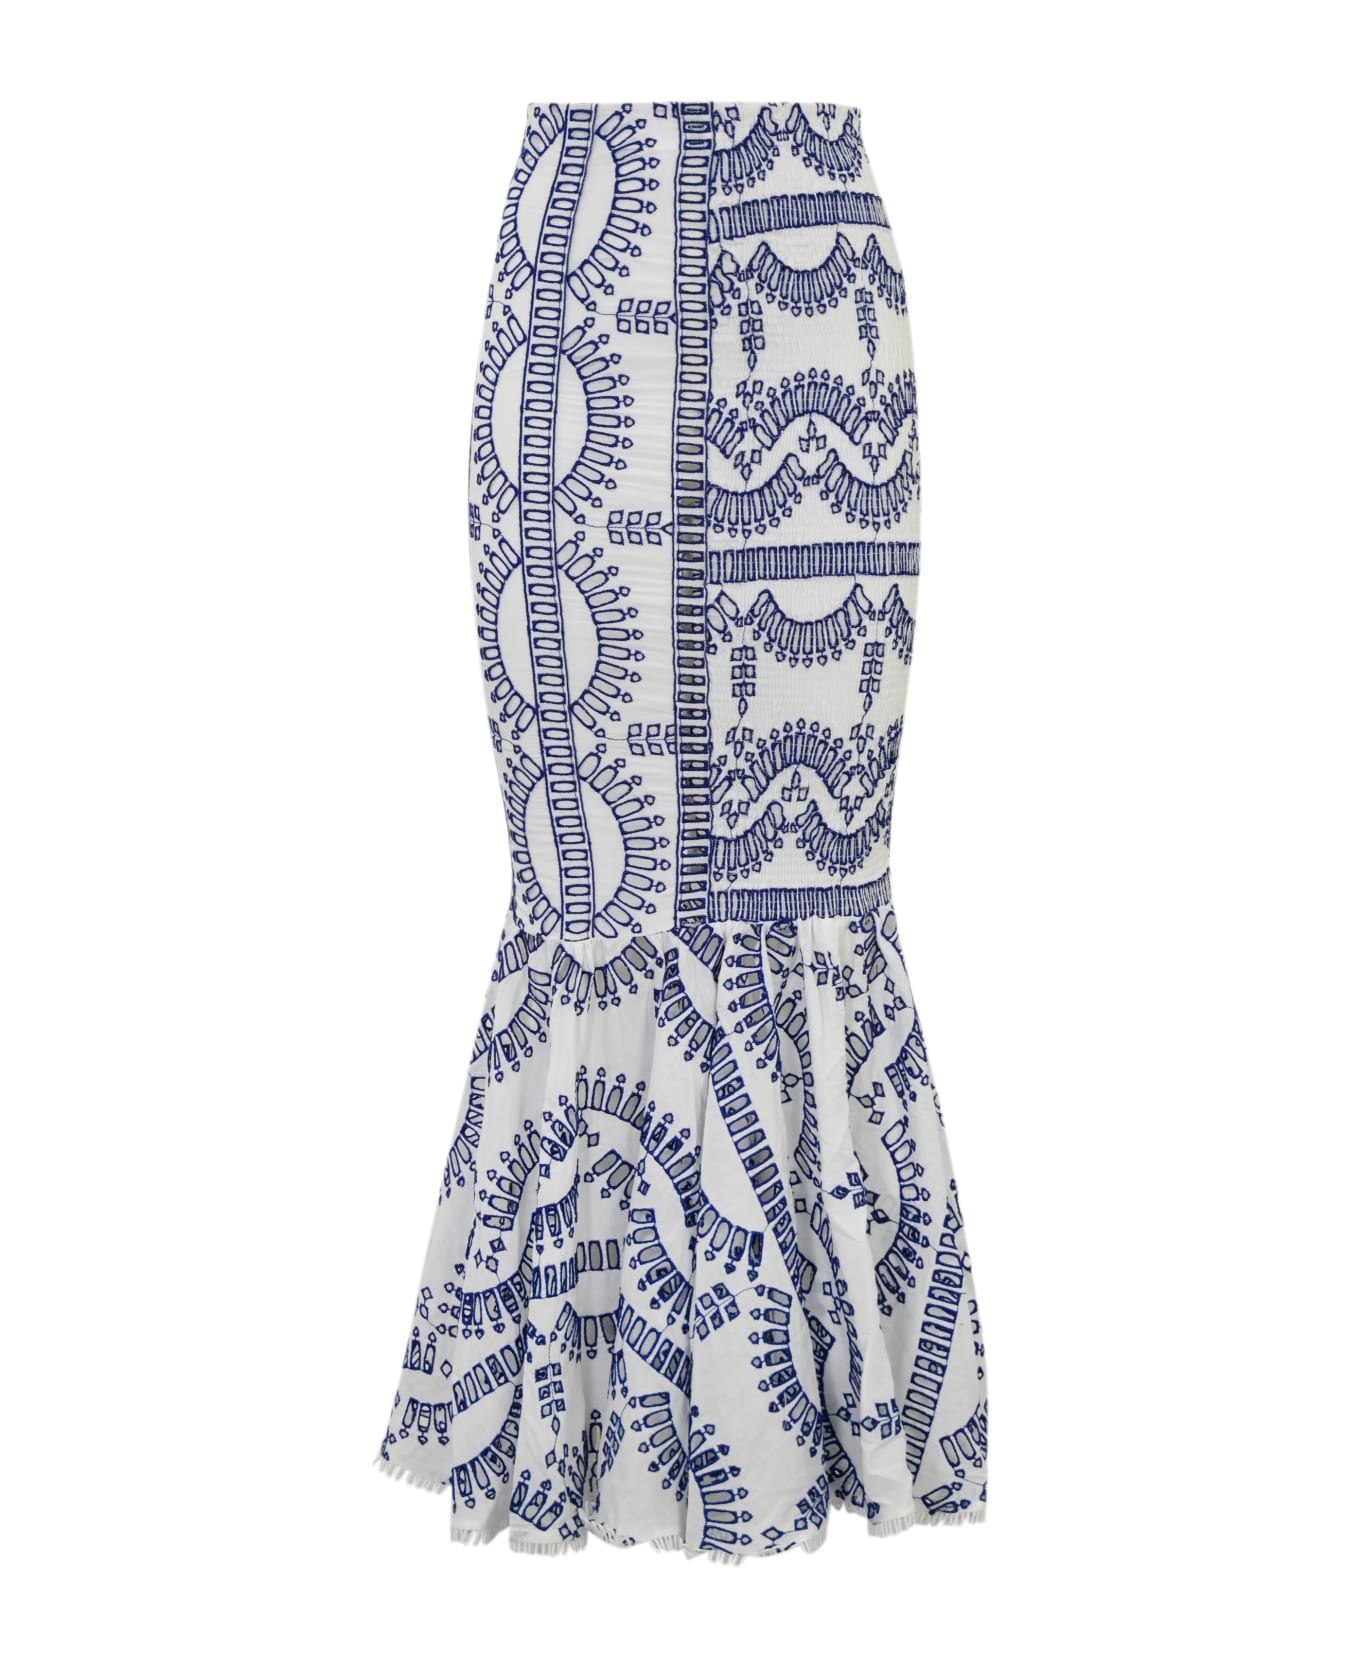 Charo Ruiz Fray Long Skirt - Klein blue スカート